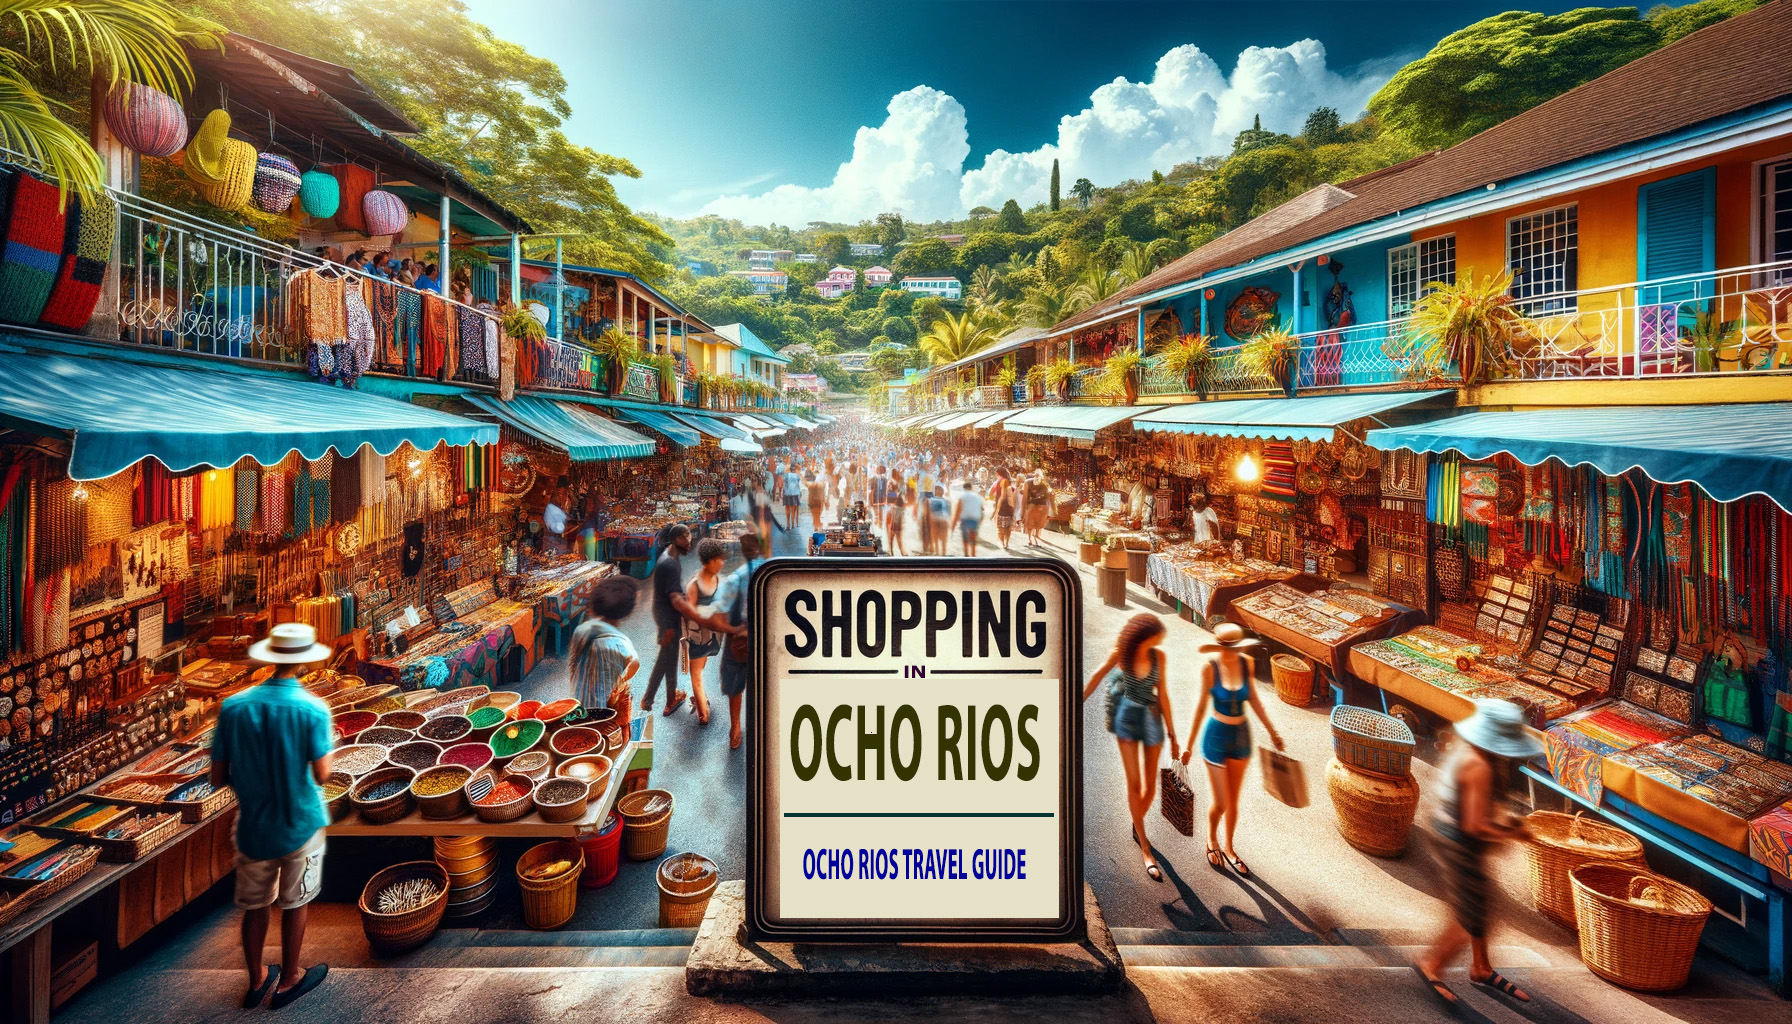 Shopping in Ocho Rios - Ocho Rios Travel Guide